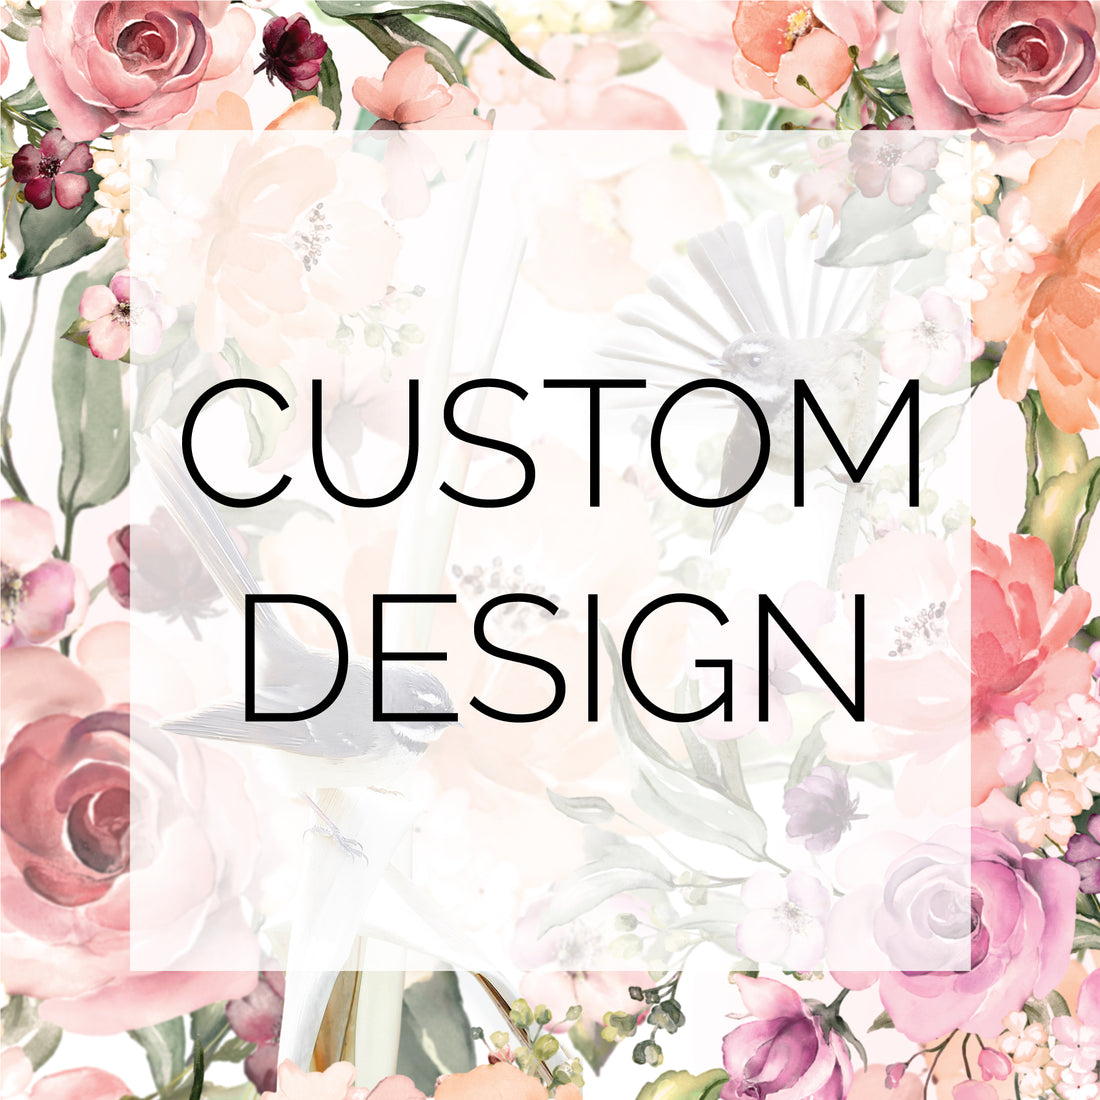 Custom Design Sills & Co New Season